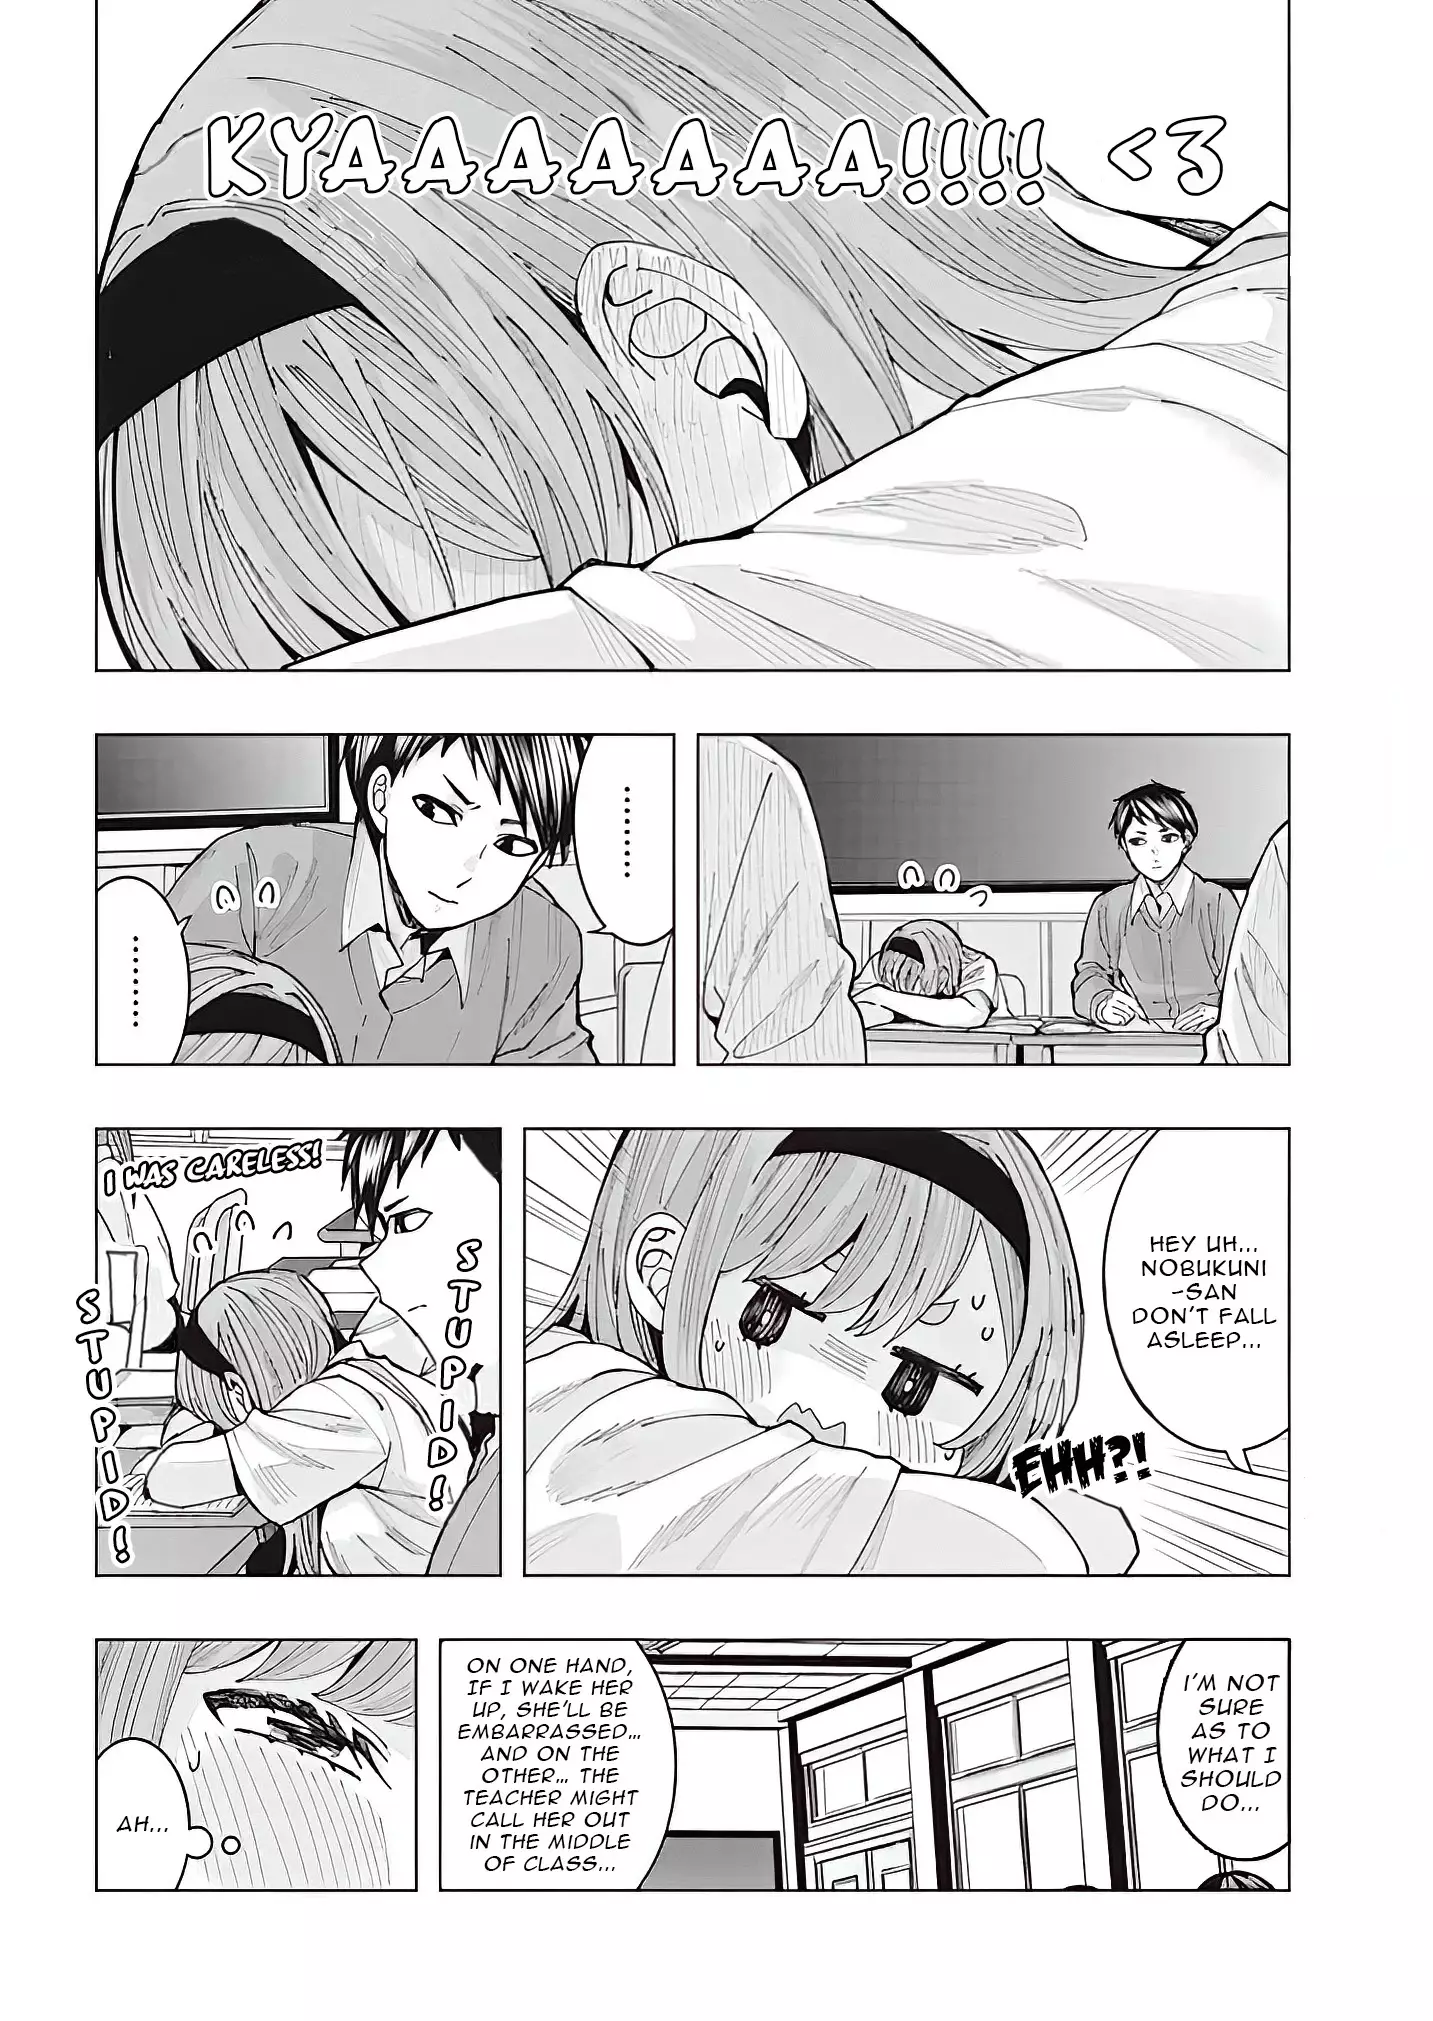 "nobukuni-San" Does She Like Me? - 2 page 5